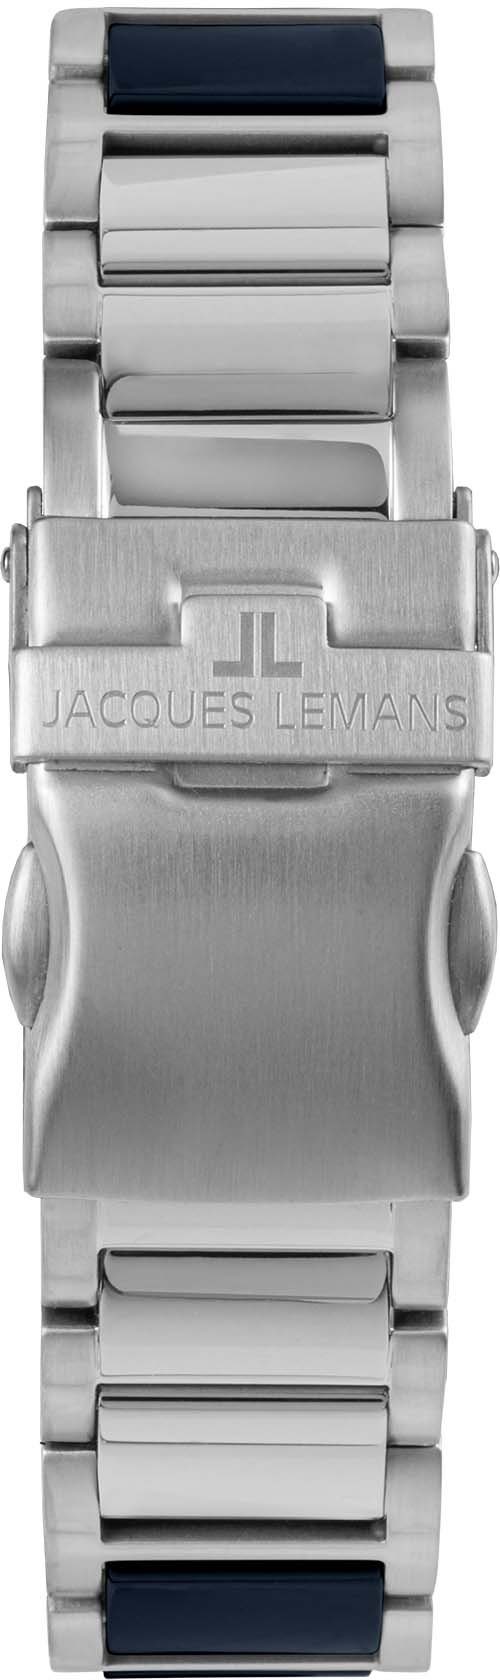 Keramikuhr Jacques Liverpool, Lemans 42-10B